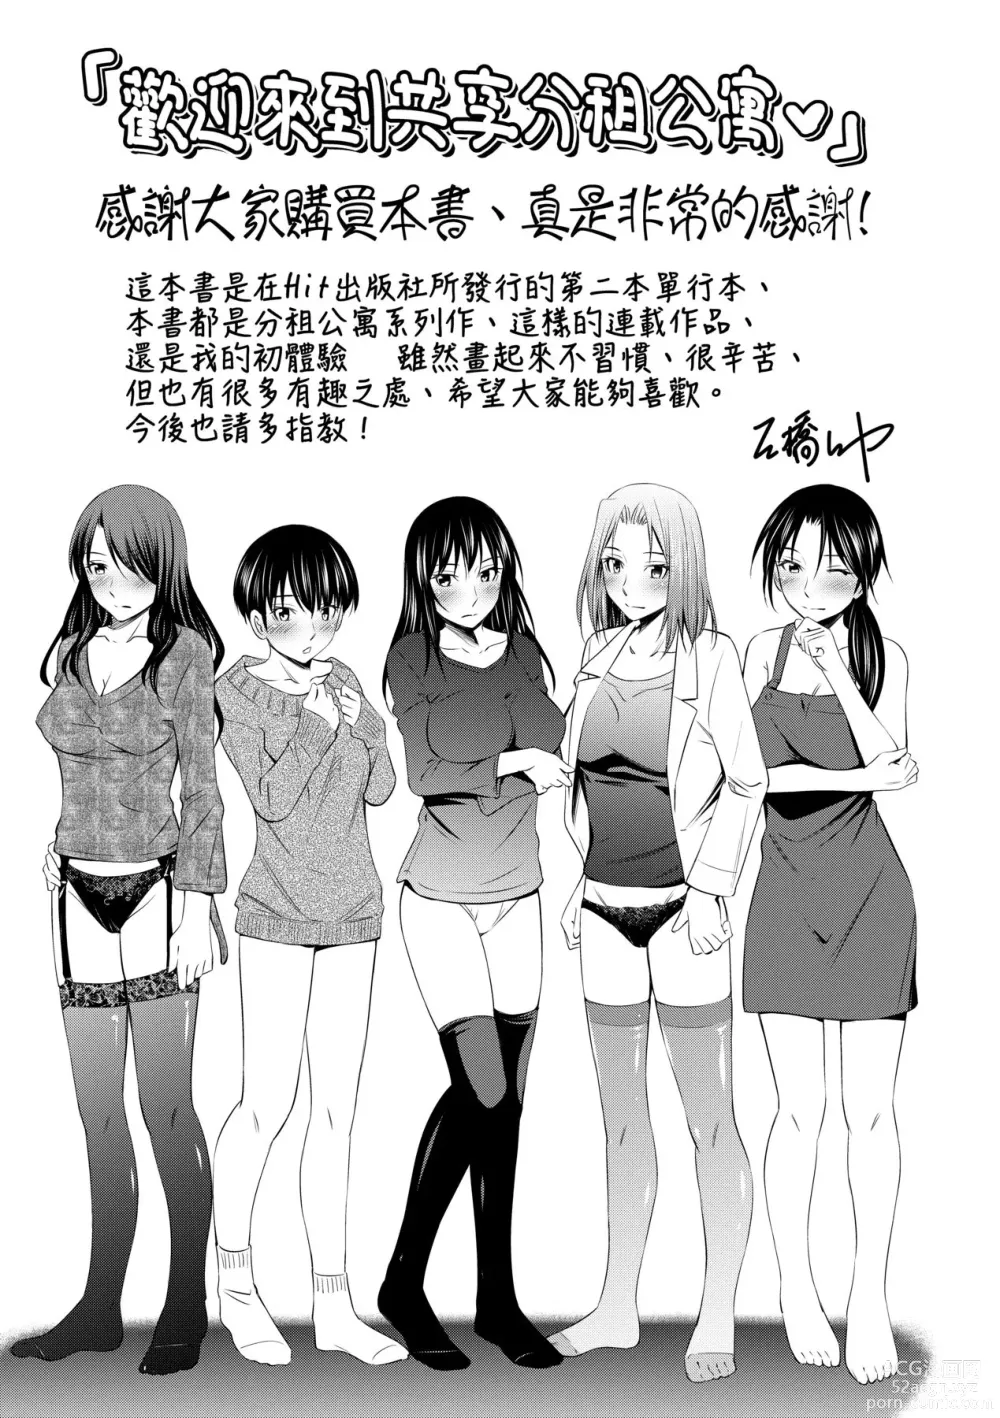 Page 202 of manga Share House e Youkoso (decensored)